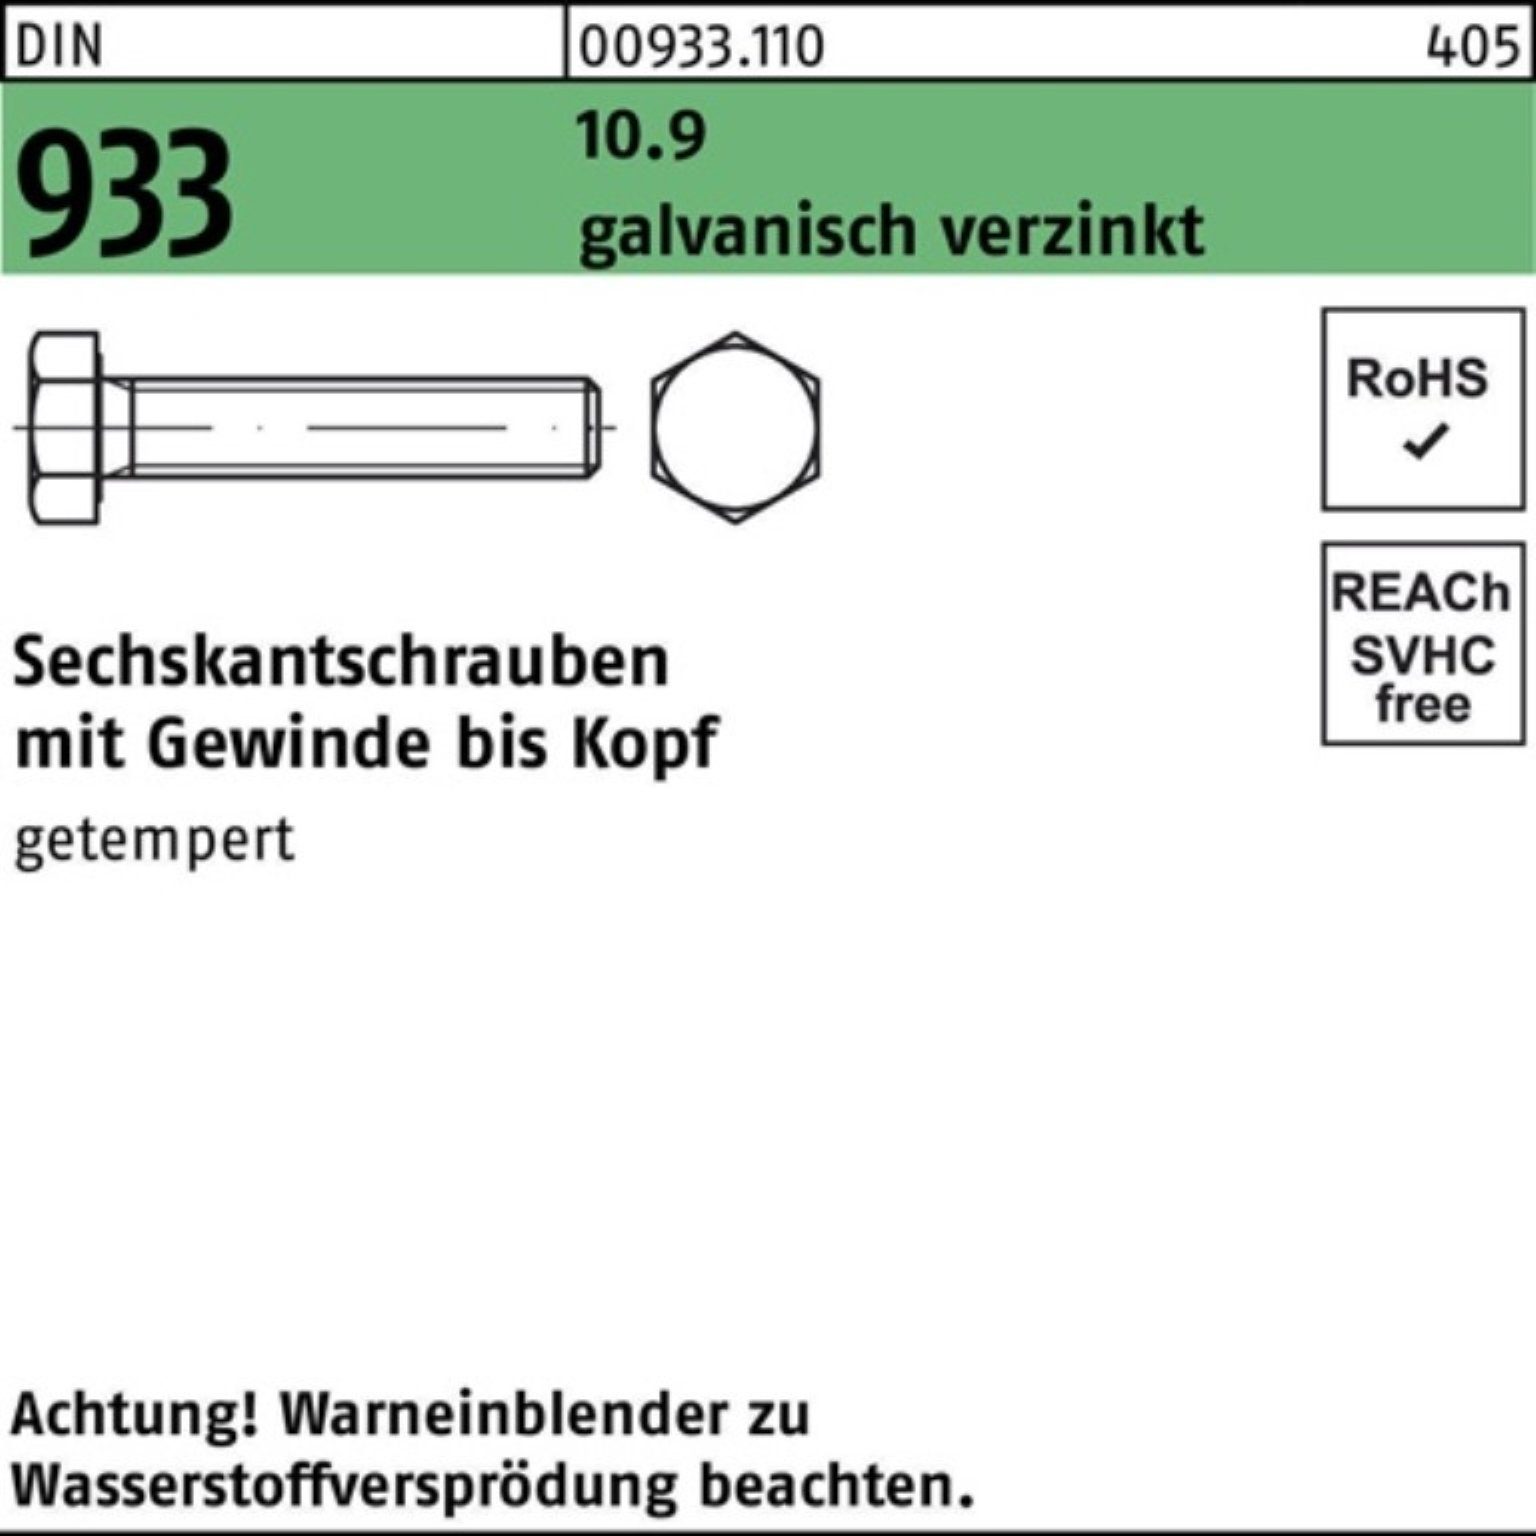 S VG Sechskantschraube 100er Sechskantschraube 100 Pack DIN galv.verz. Reyher 933 100 M10x 10.9